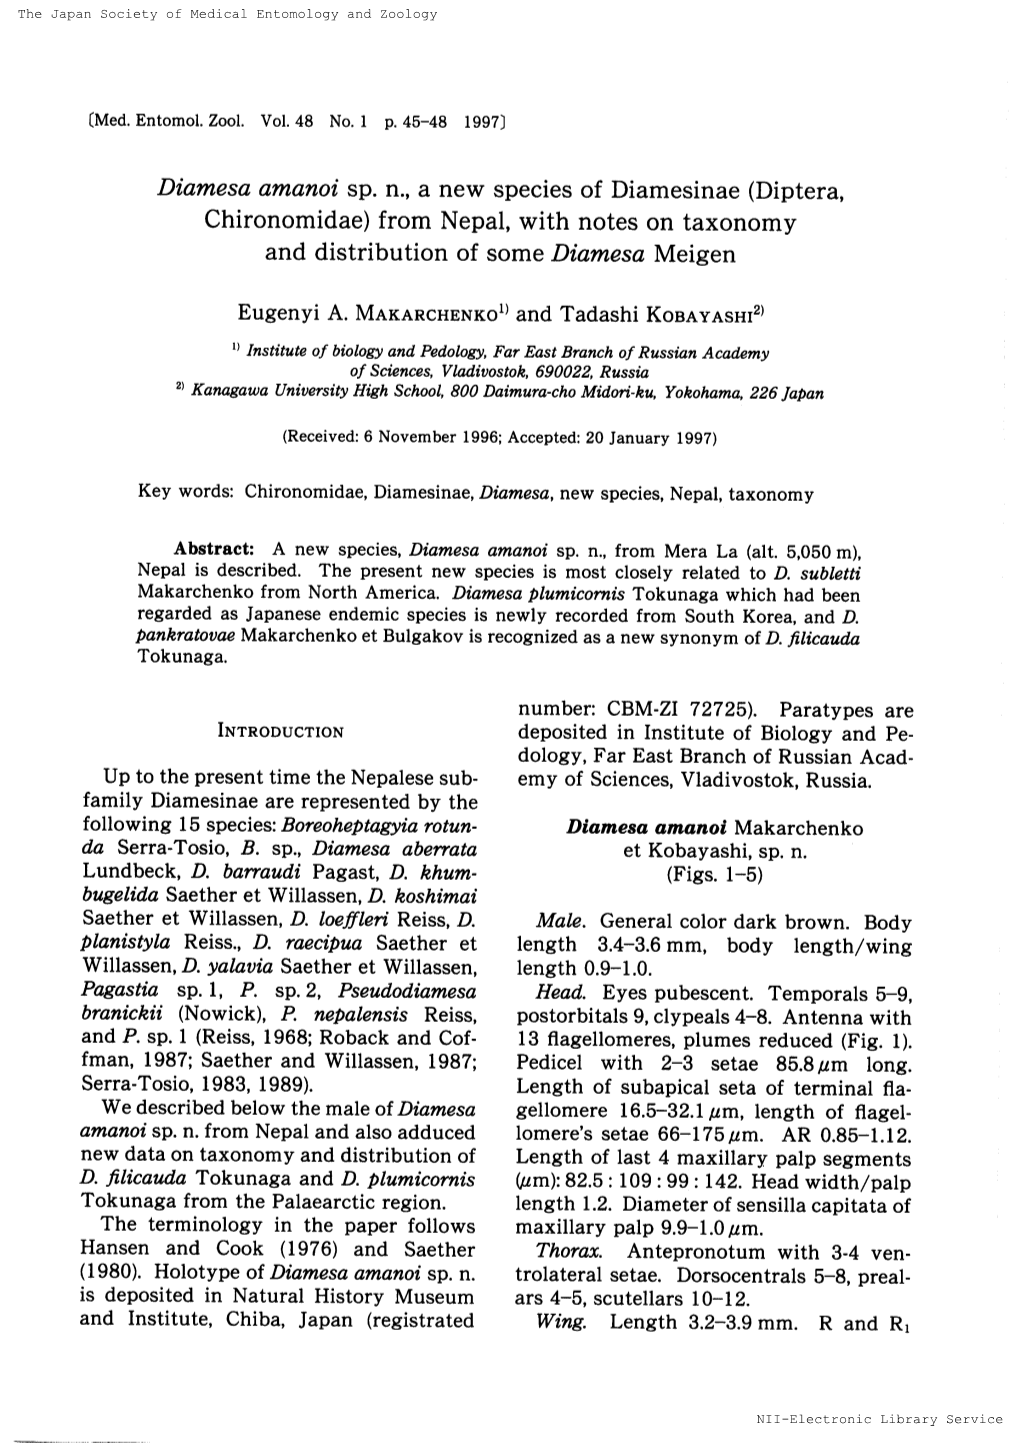 Of Diamesinae (Diptera, Chironomidae) from Nepal,With on Taxonomy Distributionof Some Diamesa Meigen and P. Sp, 1 (Reiss,1968;Ro